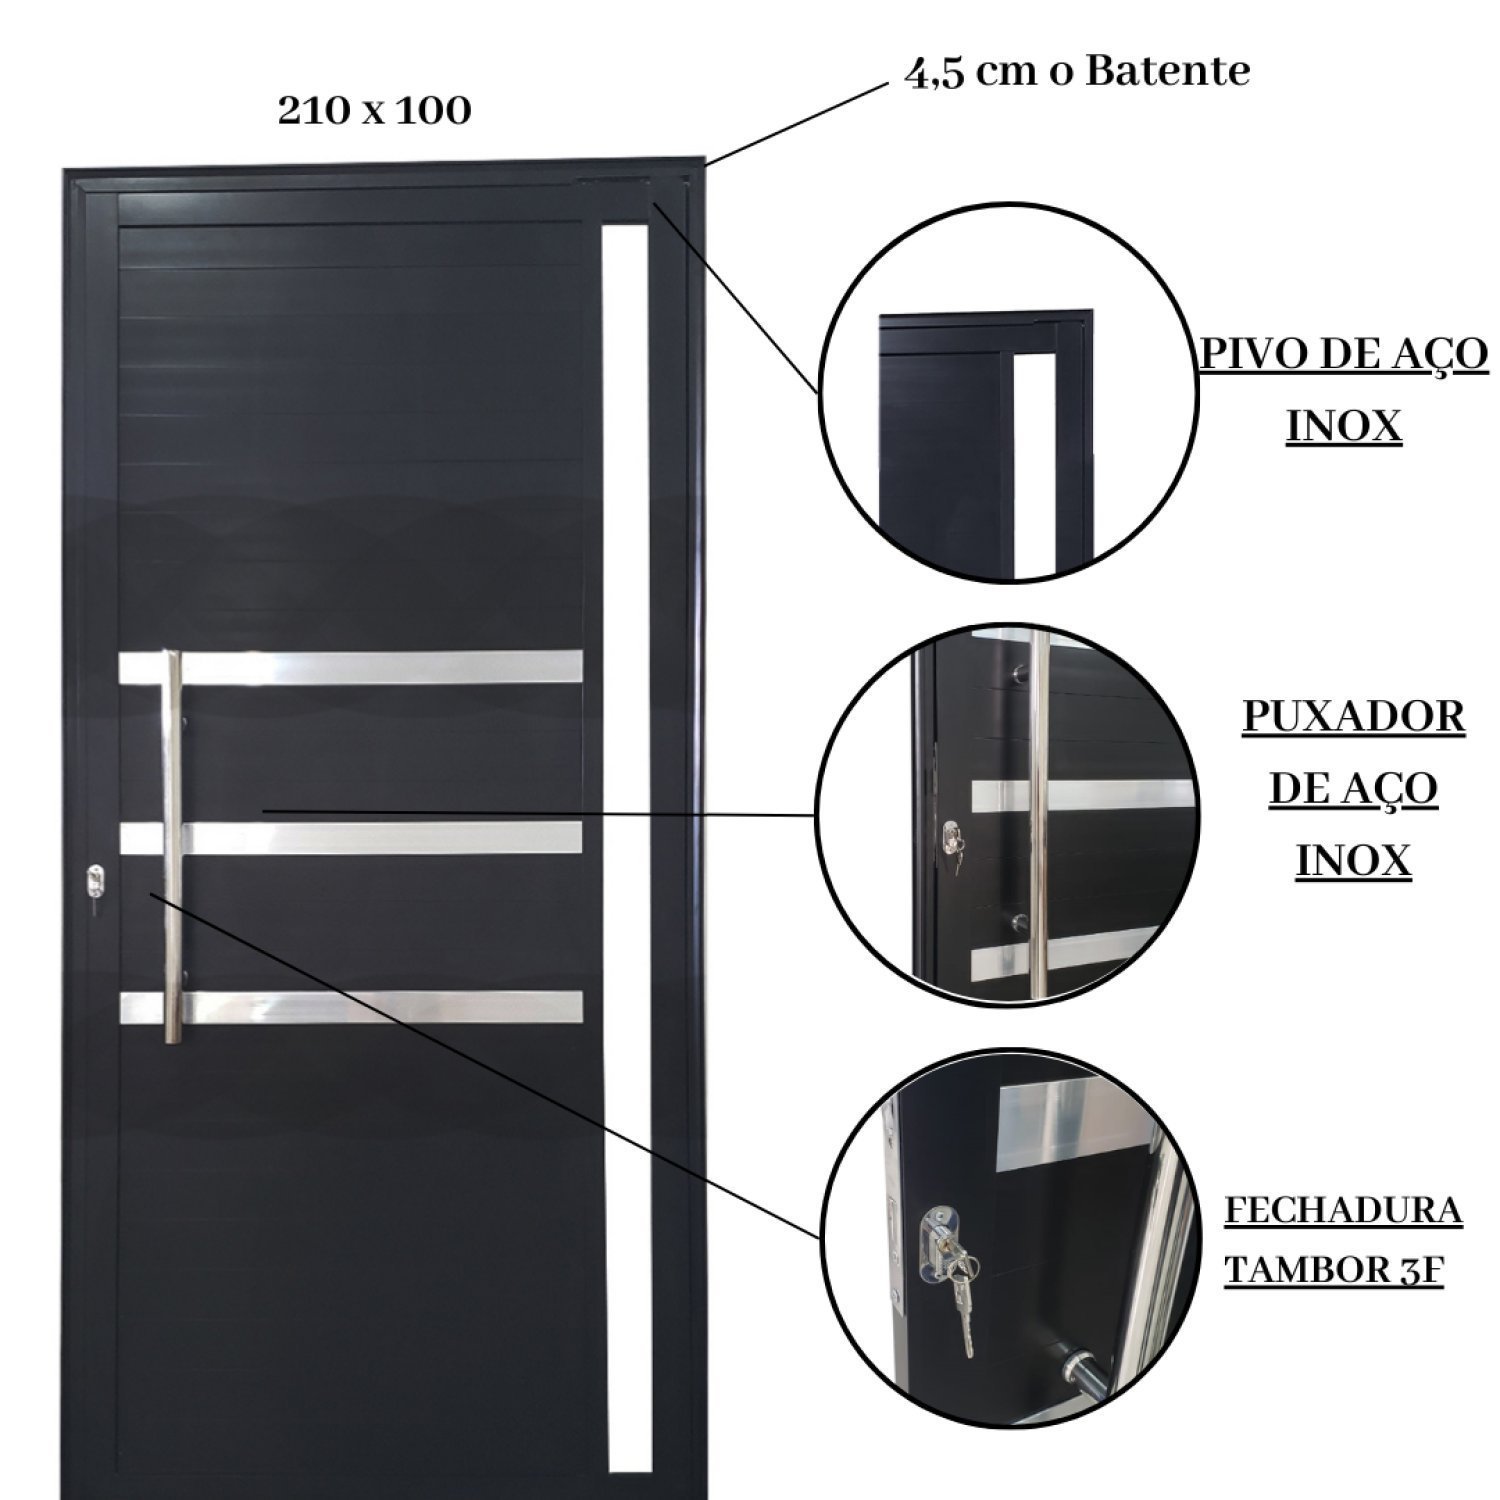 Porta Pivotante de Alumínio 210 x 100cm com Friso e Vidro Veneza Esquadrias Bergamo - 4